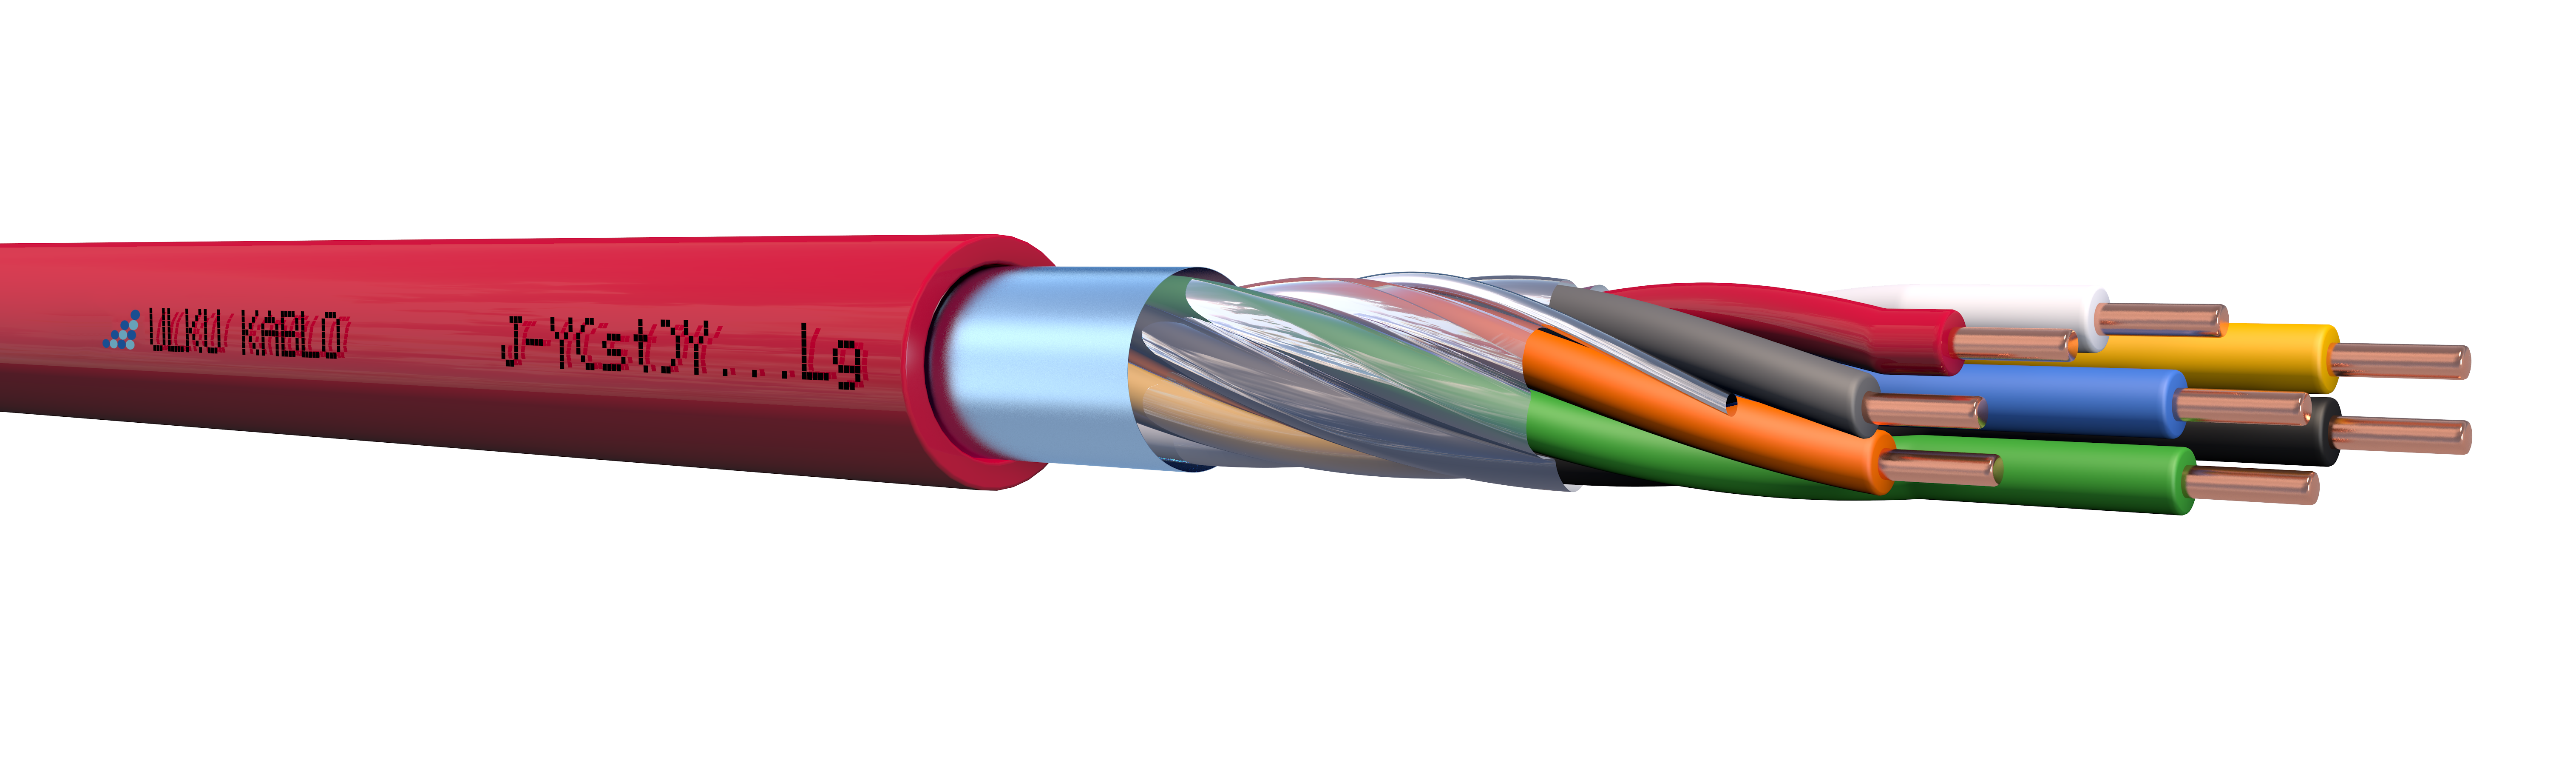 Ülkü Kablo J-Y(St)Y...Lg 4x2x1,50 mm²+0,80mm